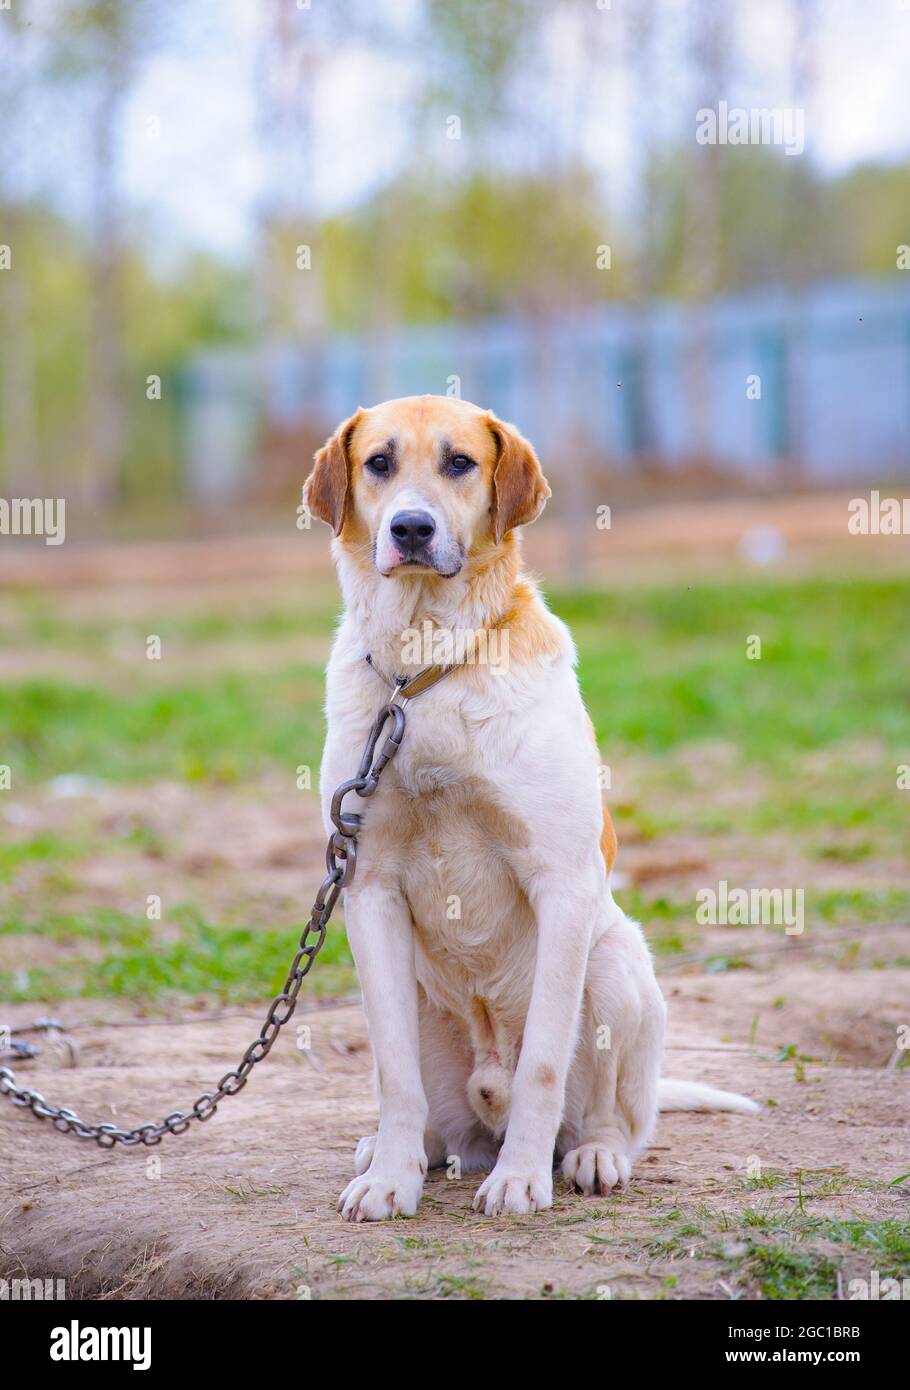 Cute sad dog on a metallic leash outdoors Stock Photo